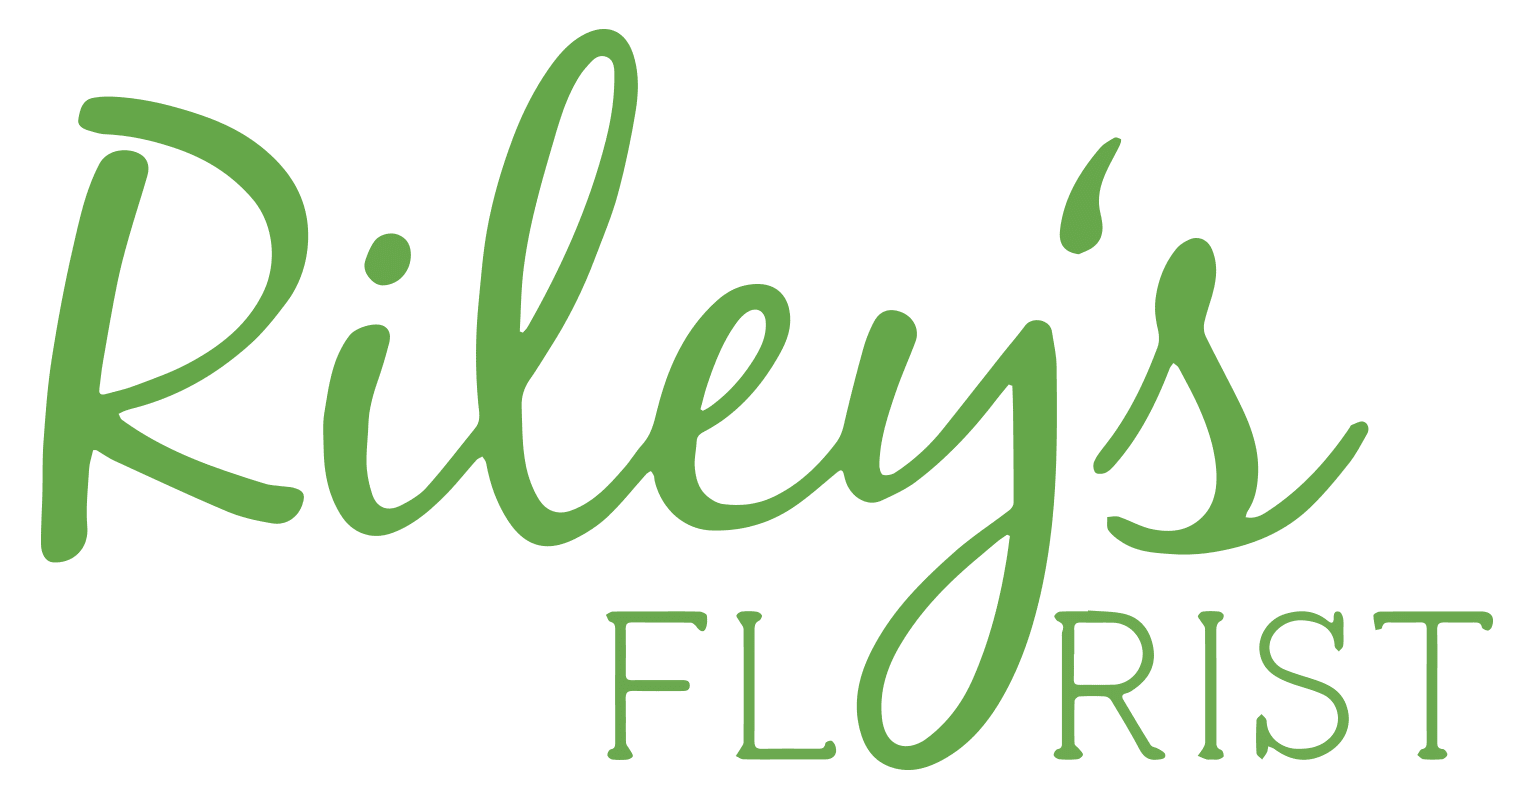 Riley's Florist